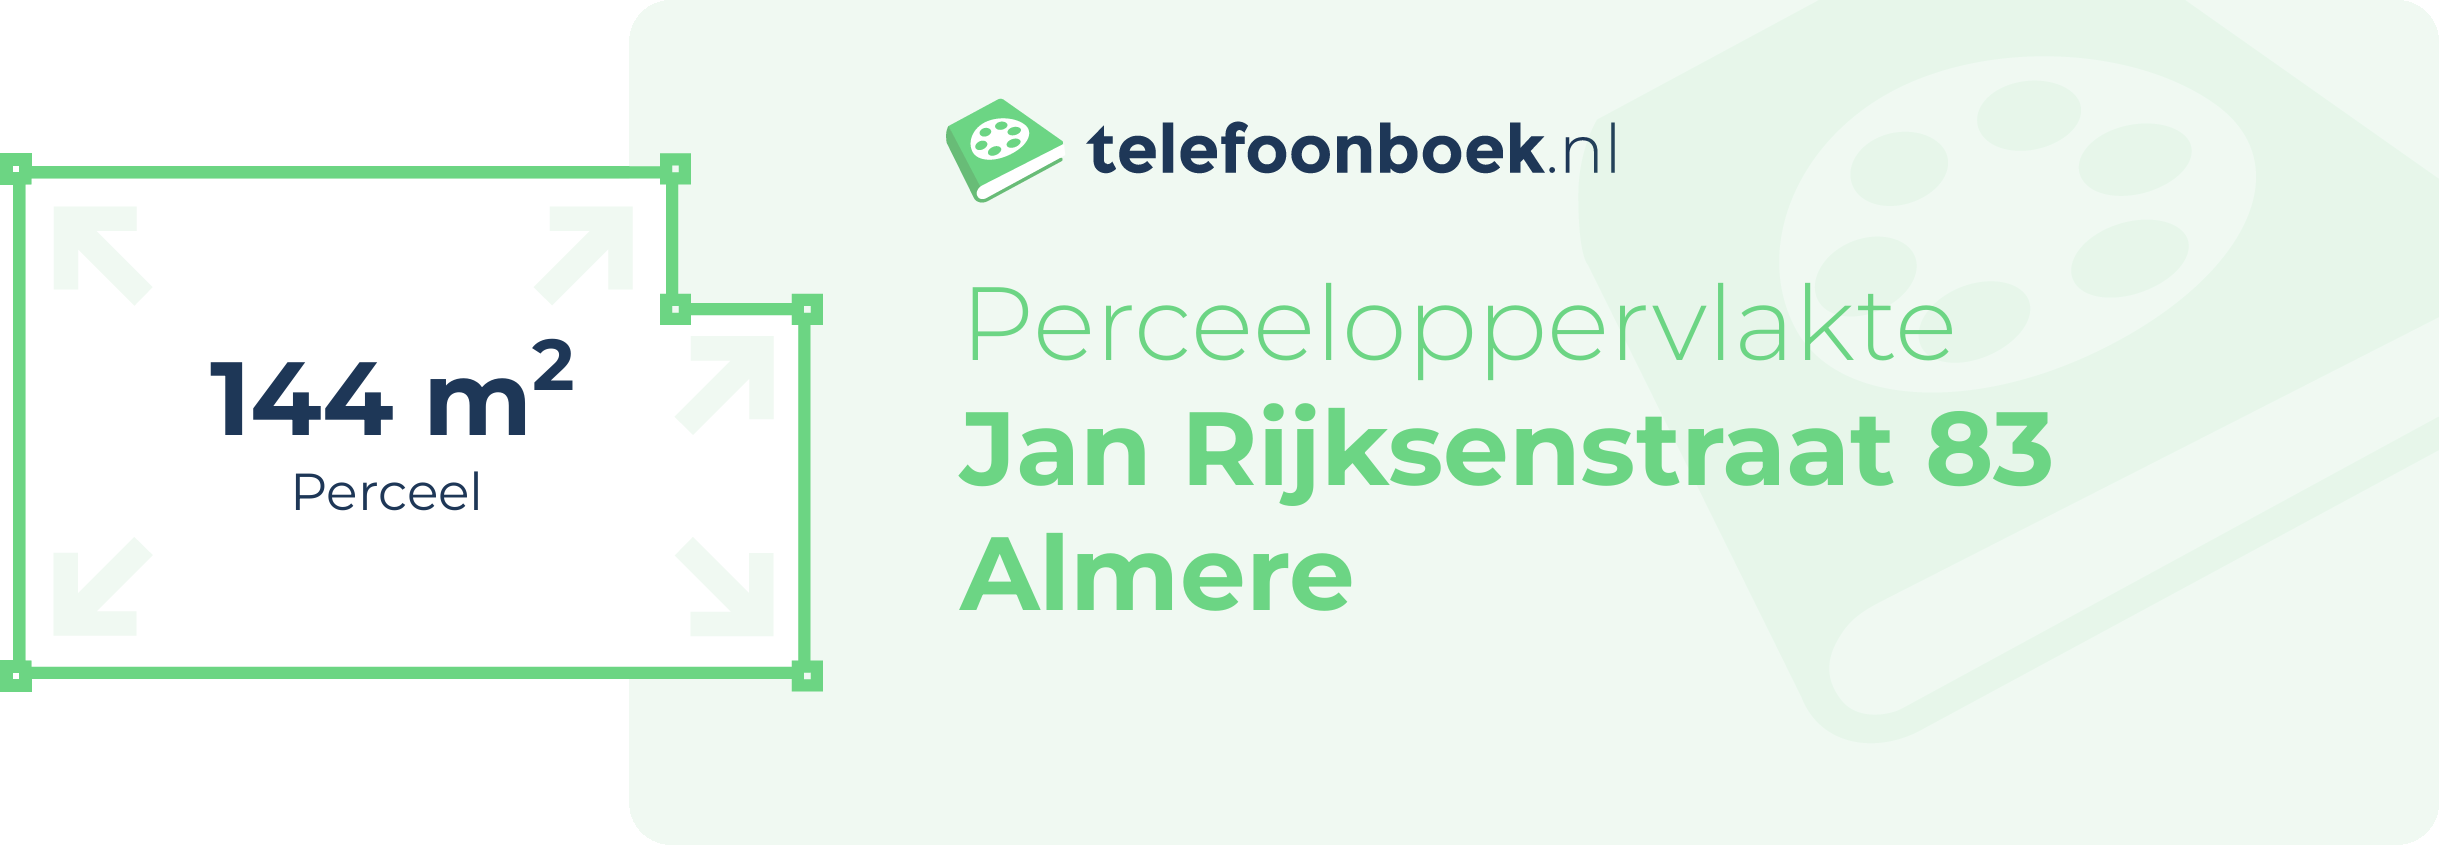 Perceeloppervlakte Jan Rijksenstraat 83 Almere